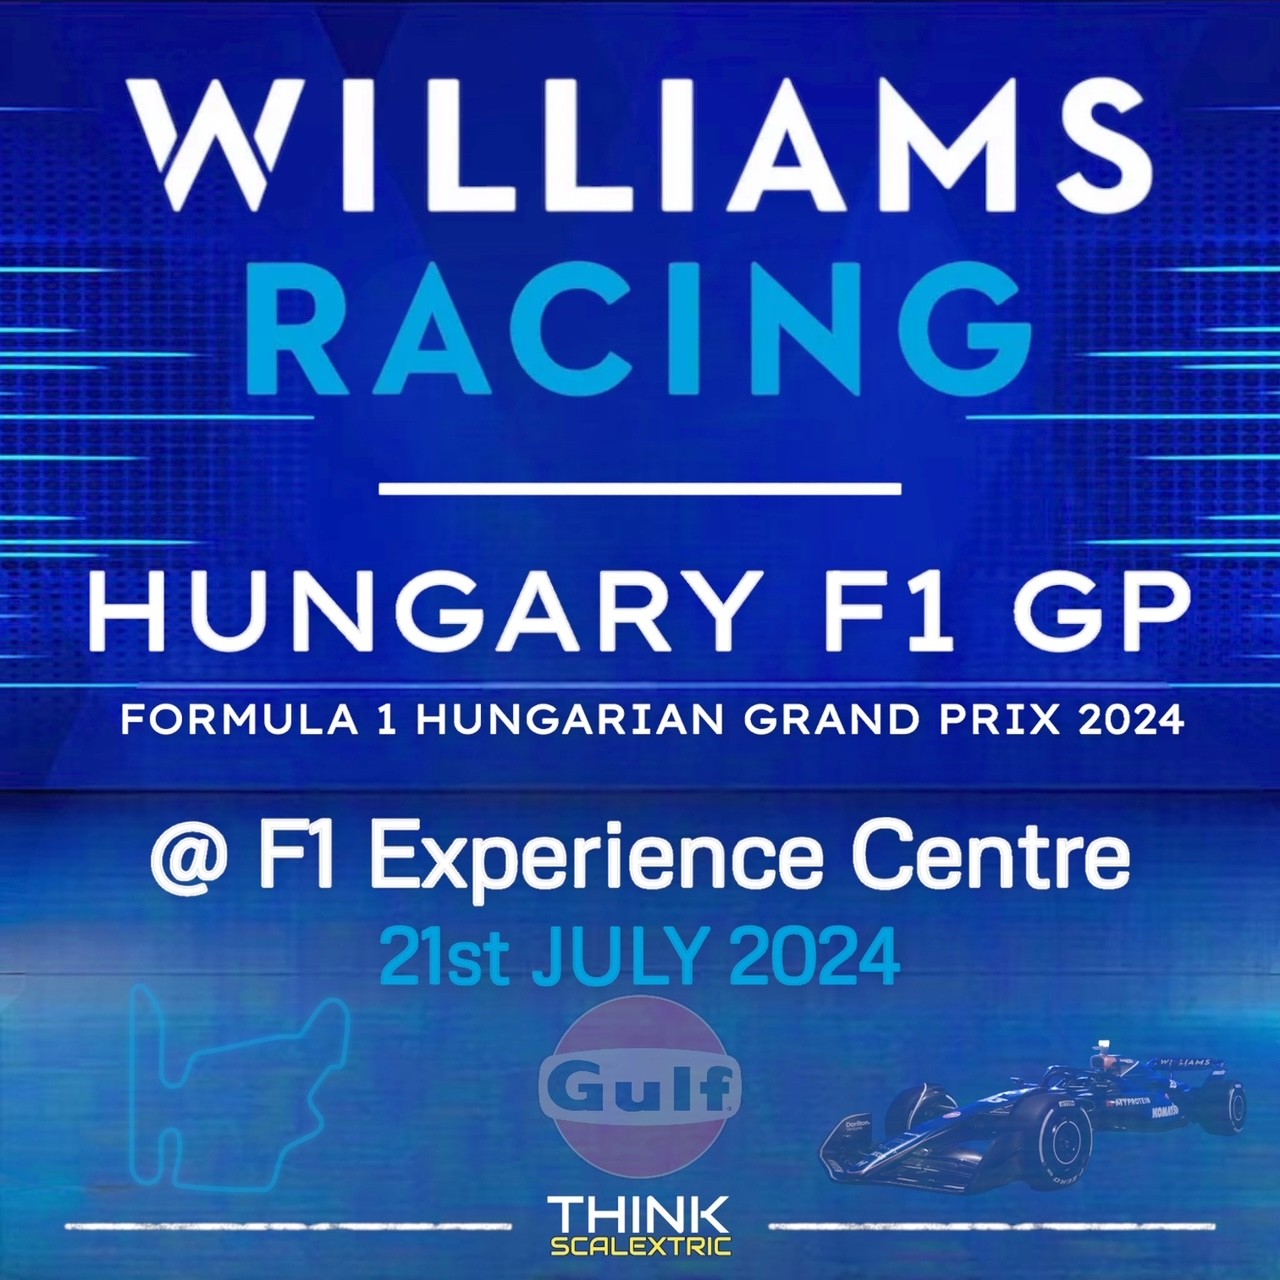 williams f1 racing race day hospitality Hungary f1 2024 gp